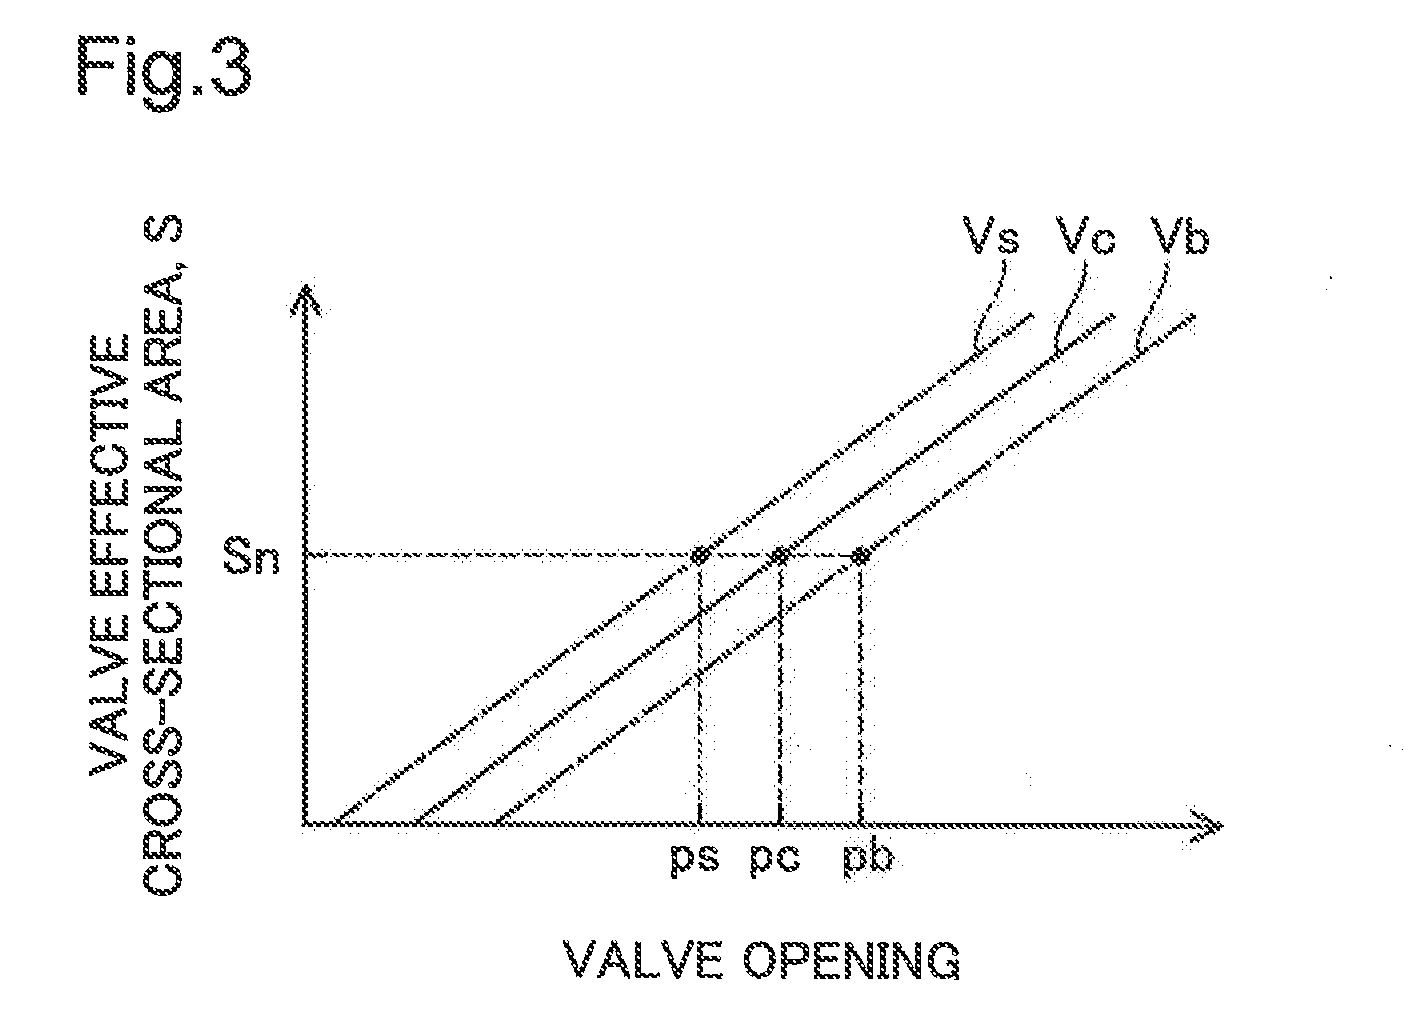 Valve control apparatus and valve control method